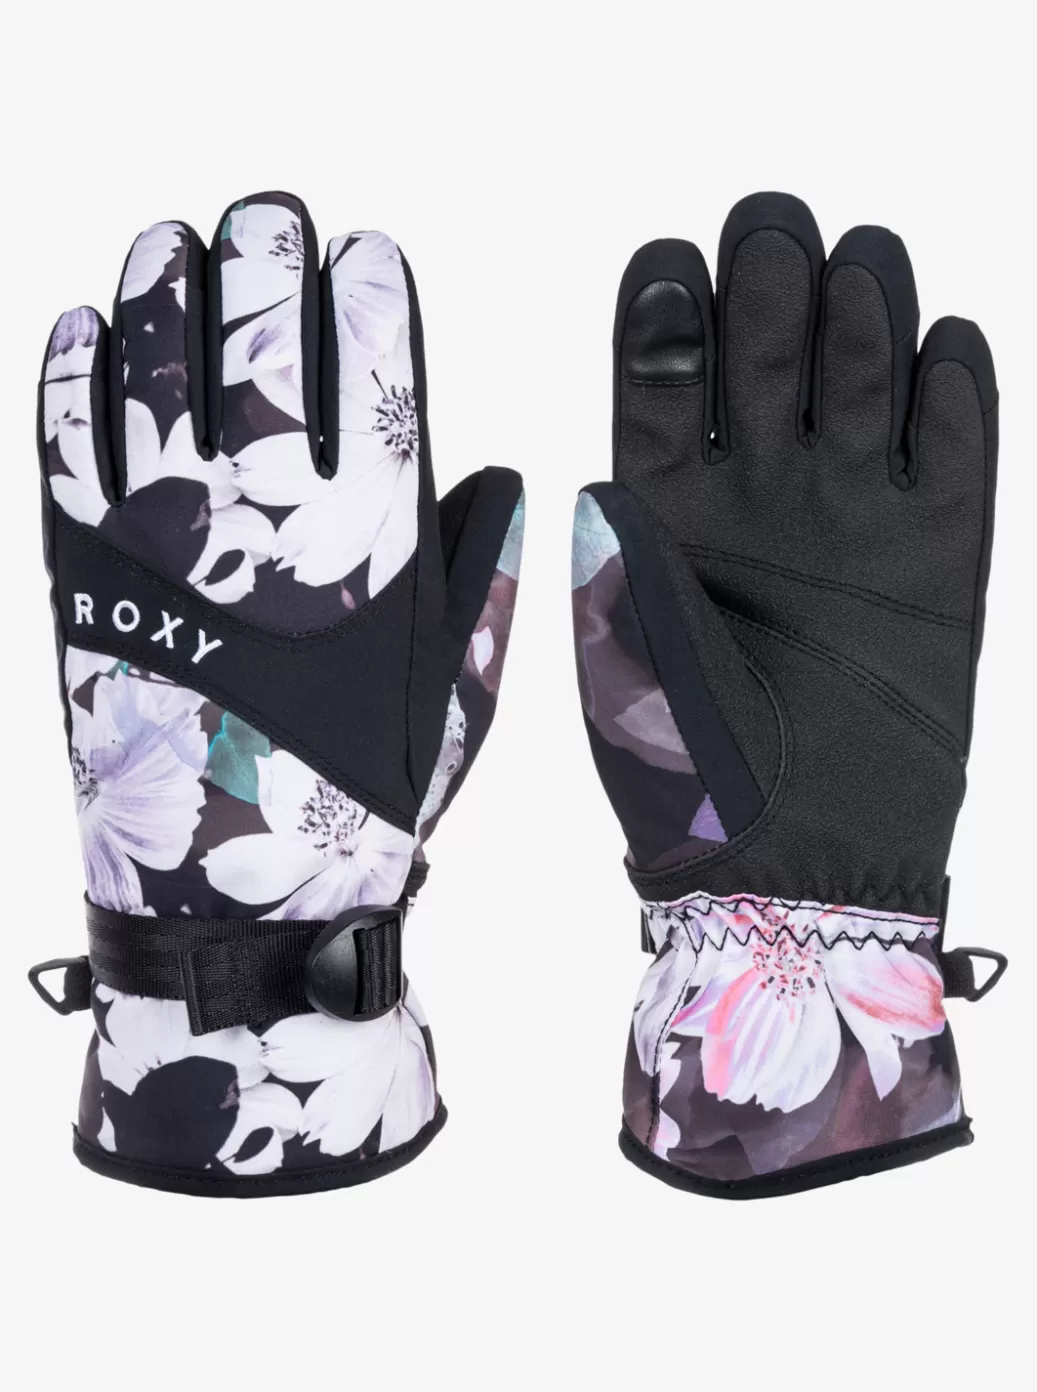 Snow Accessories | Girls Snow | KIDS | WOMEN ROXY Girls' 4-16 Jetty Technical Snowboard/Ski Gloves True Black Blurry Flower